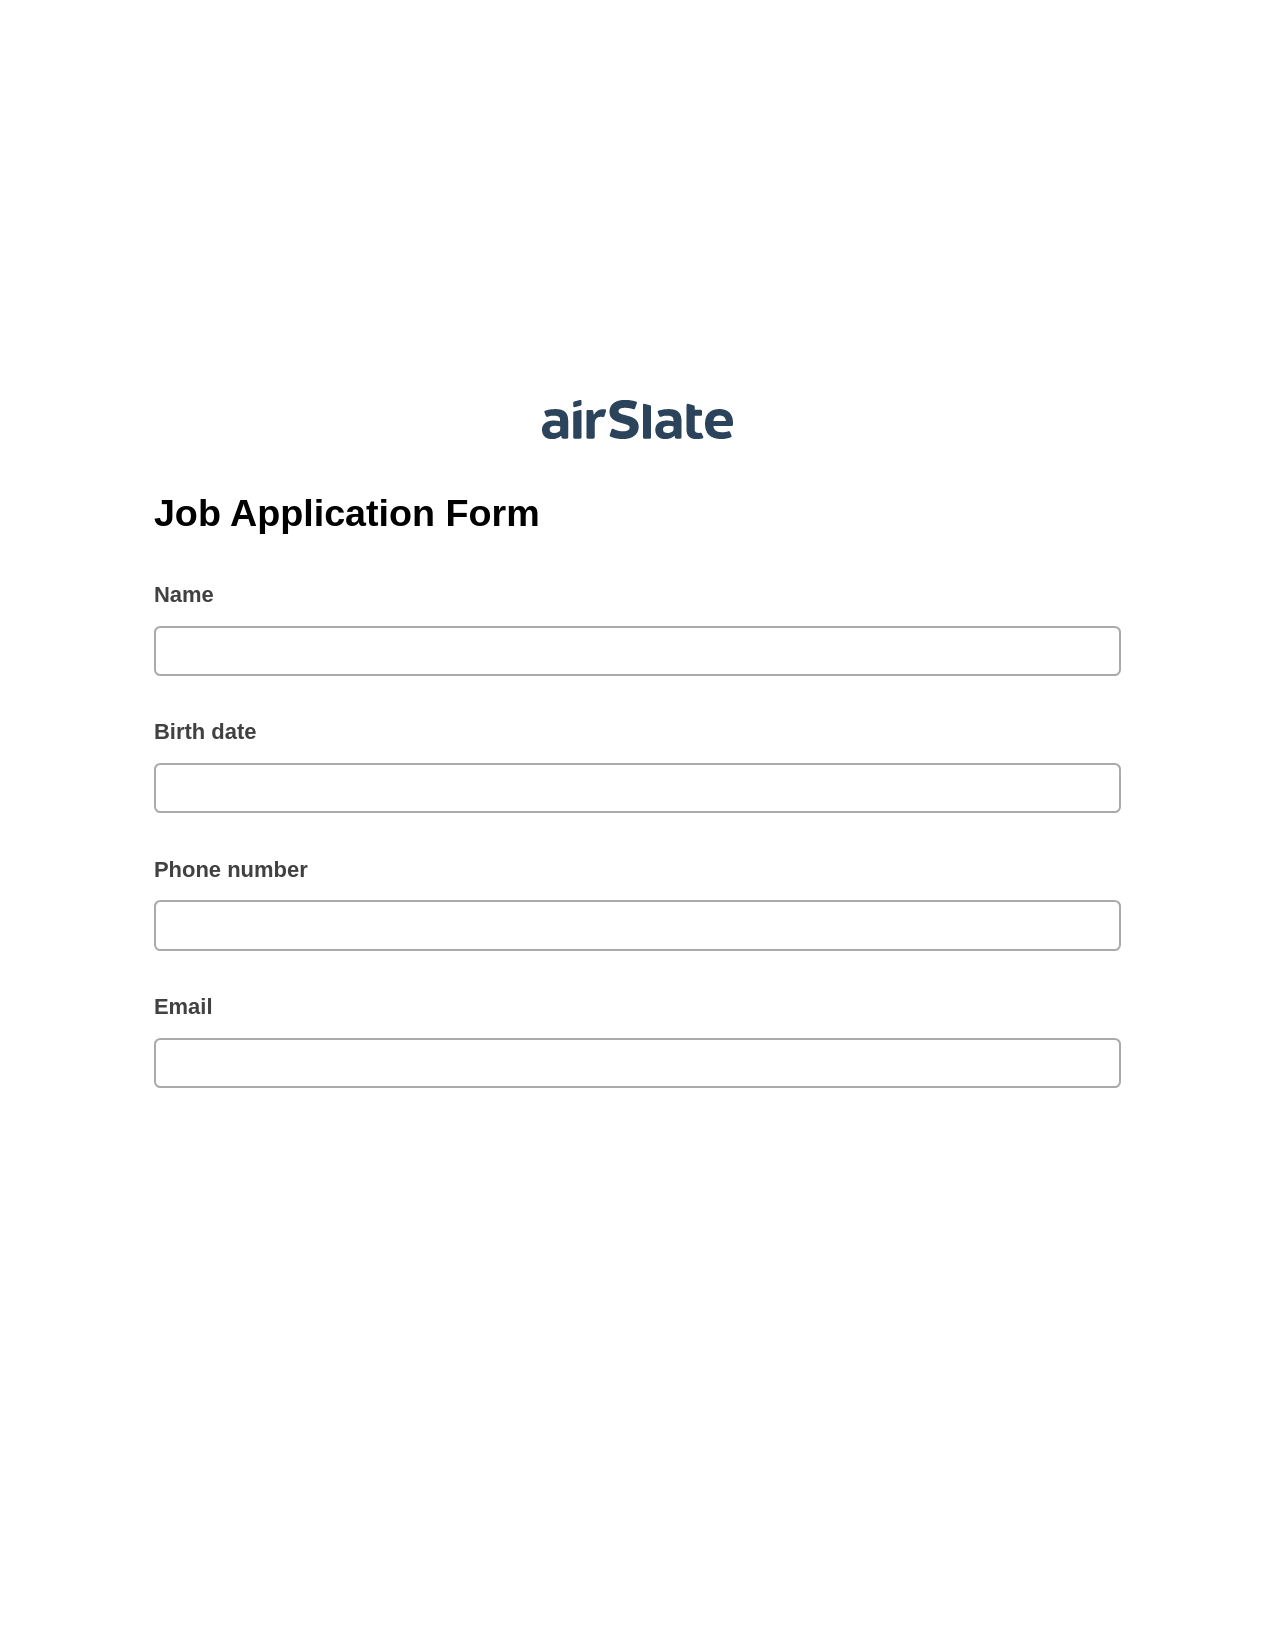 Multirole Job Application Form Pre-fill from Google Sheets Bot, Create slate addon, Export to Google Sheet Bot